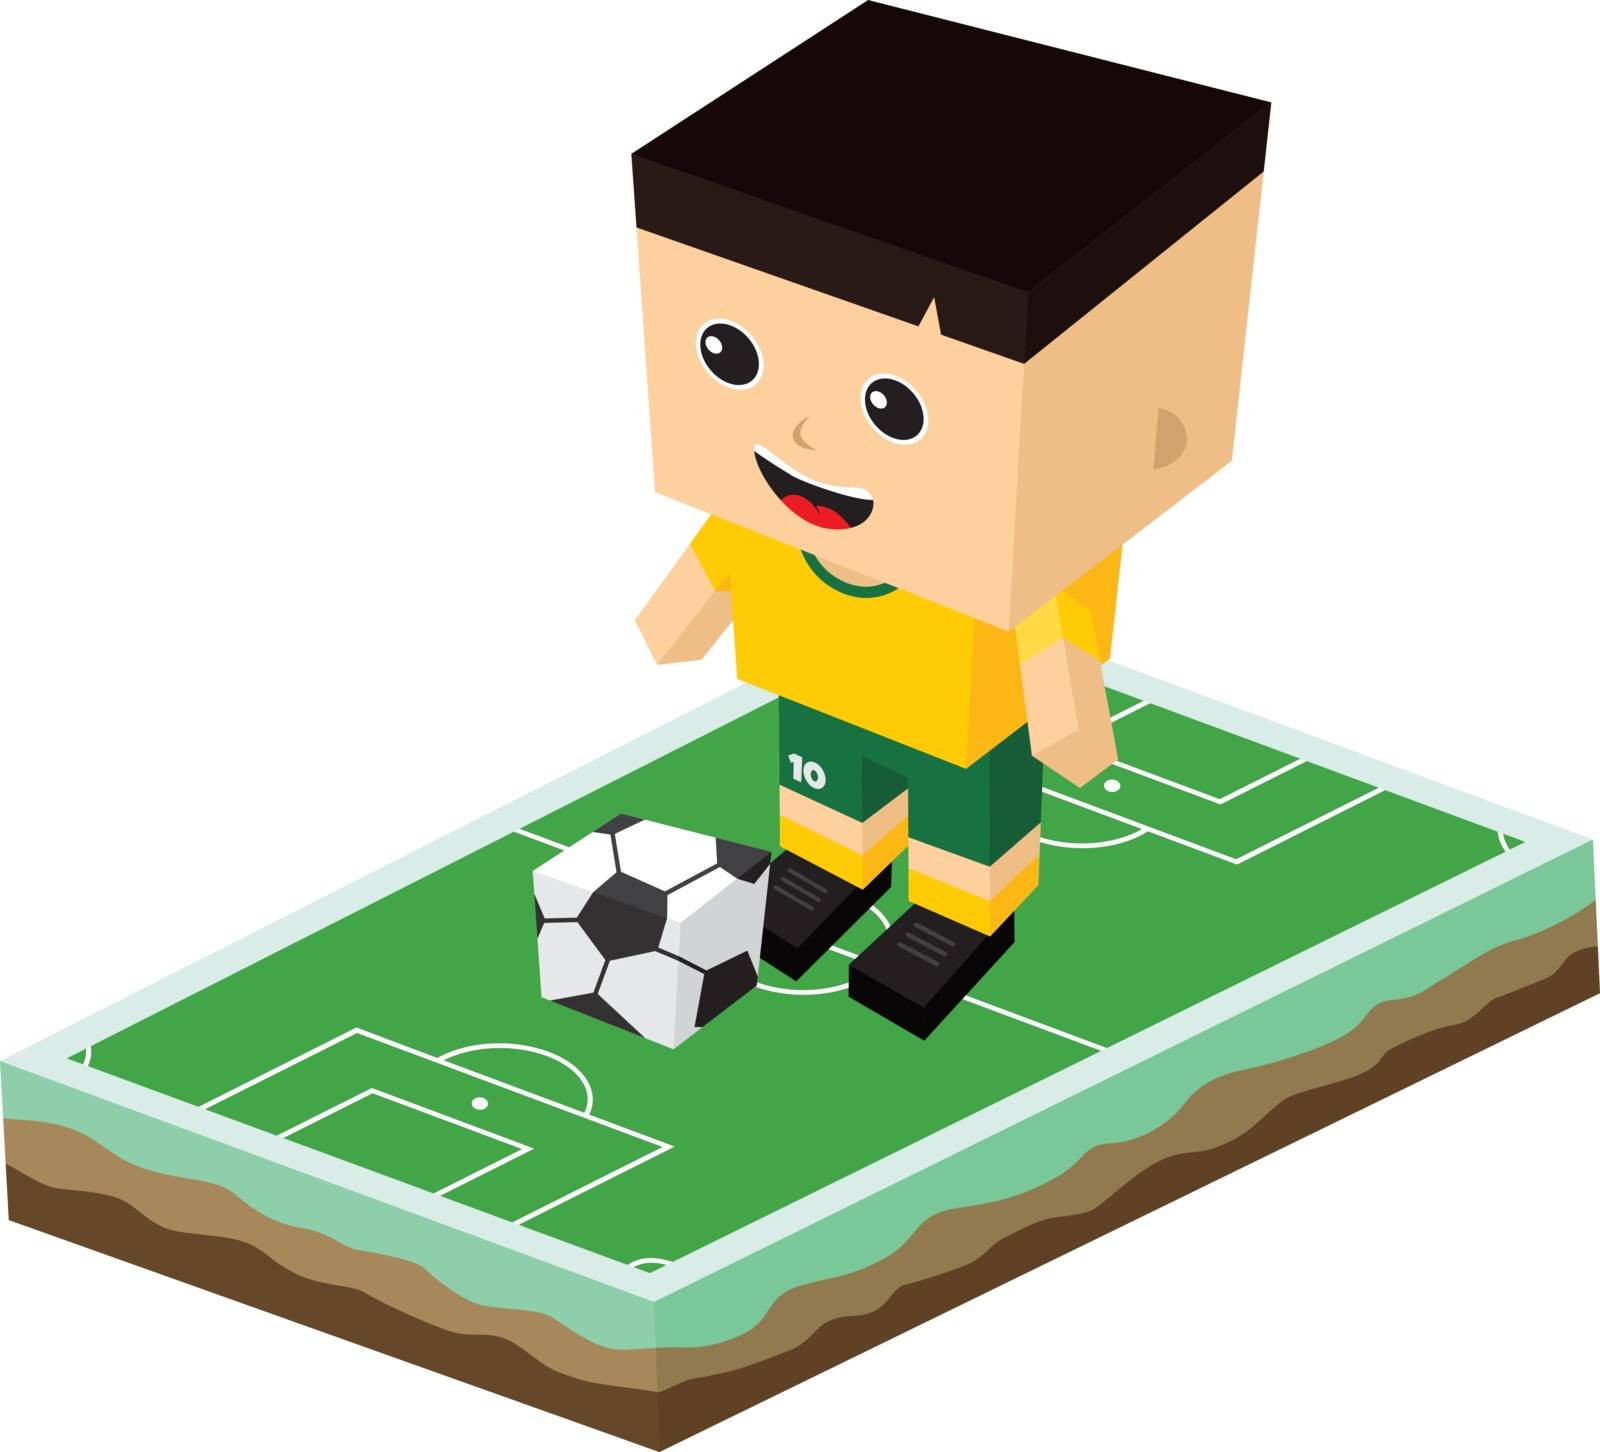 cartoon soccer player by vector1st